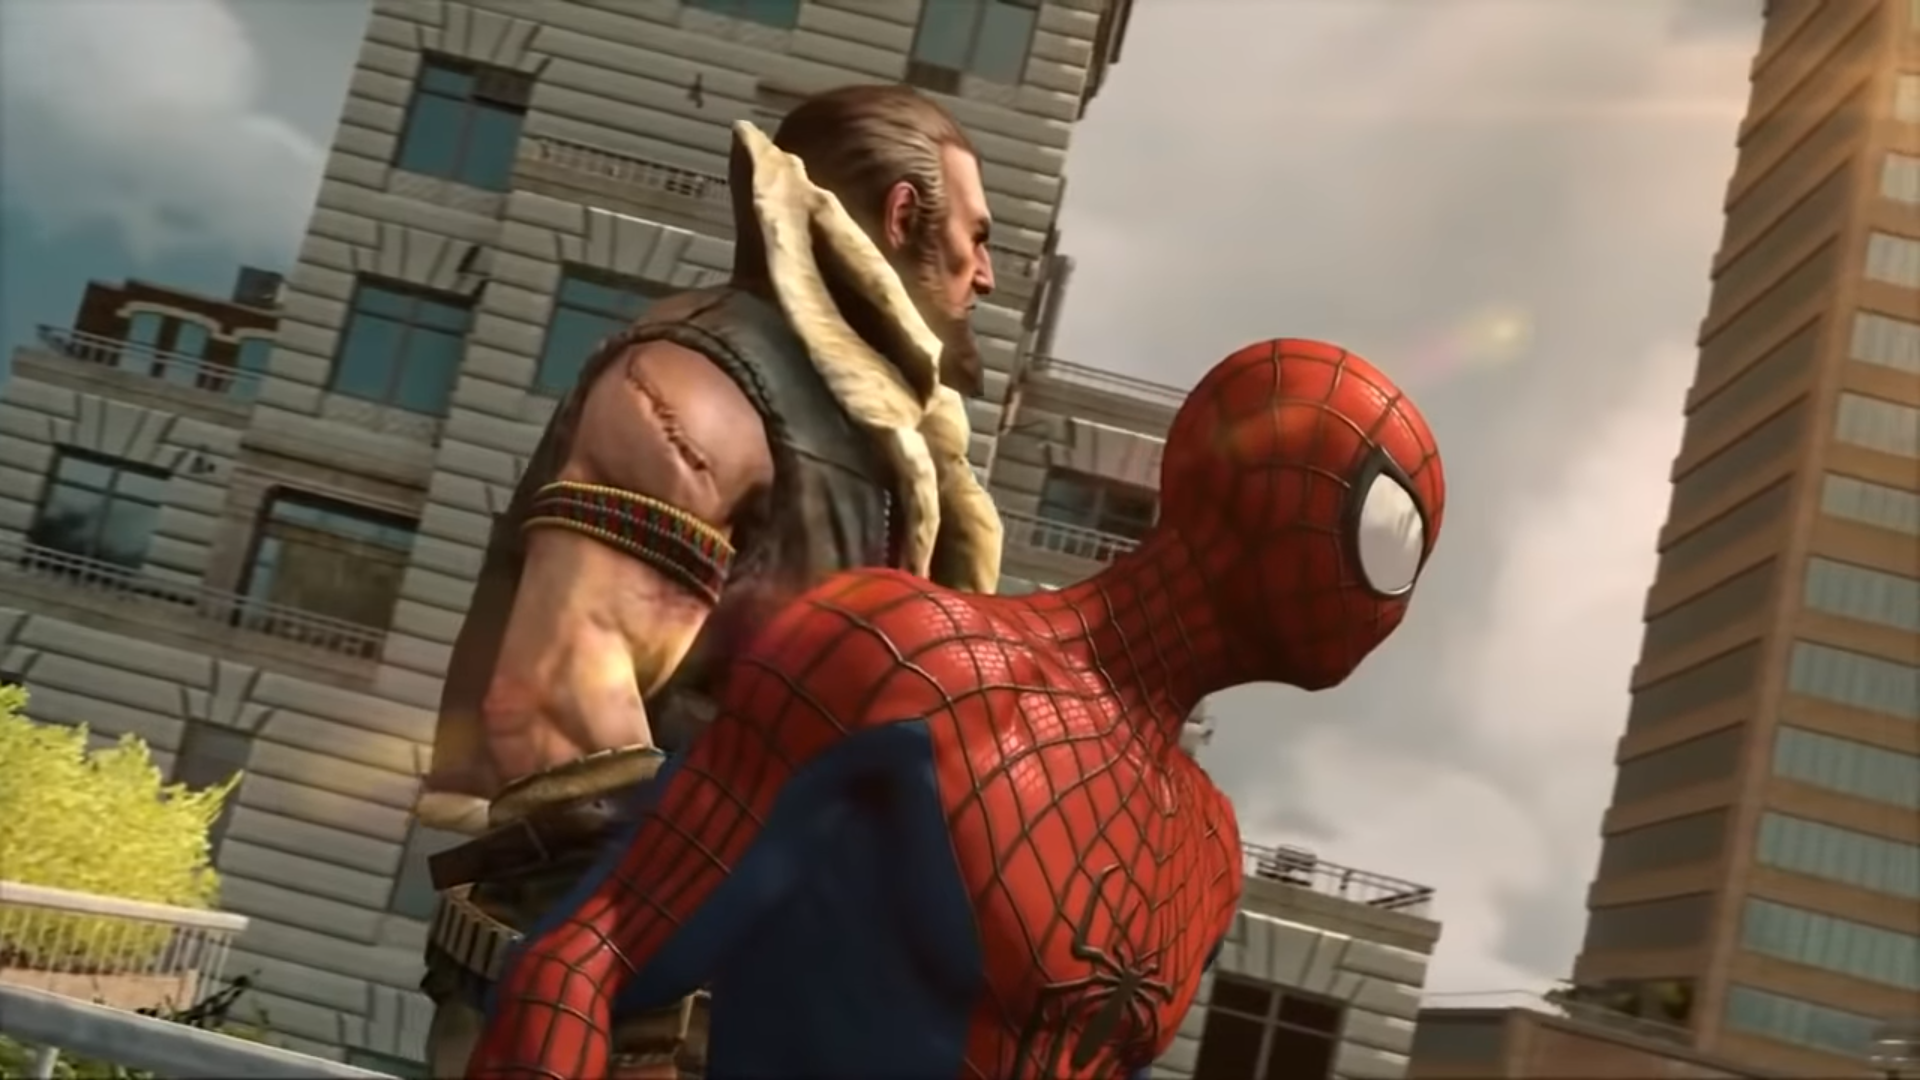 Игры зеленого человека паука. Spider-man 2. The amazing Spider-man 2 (новый человек — паук 2). Человек паук амазинг игра. The amazing Spider-man 2014 игра игра Питер Паркер.